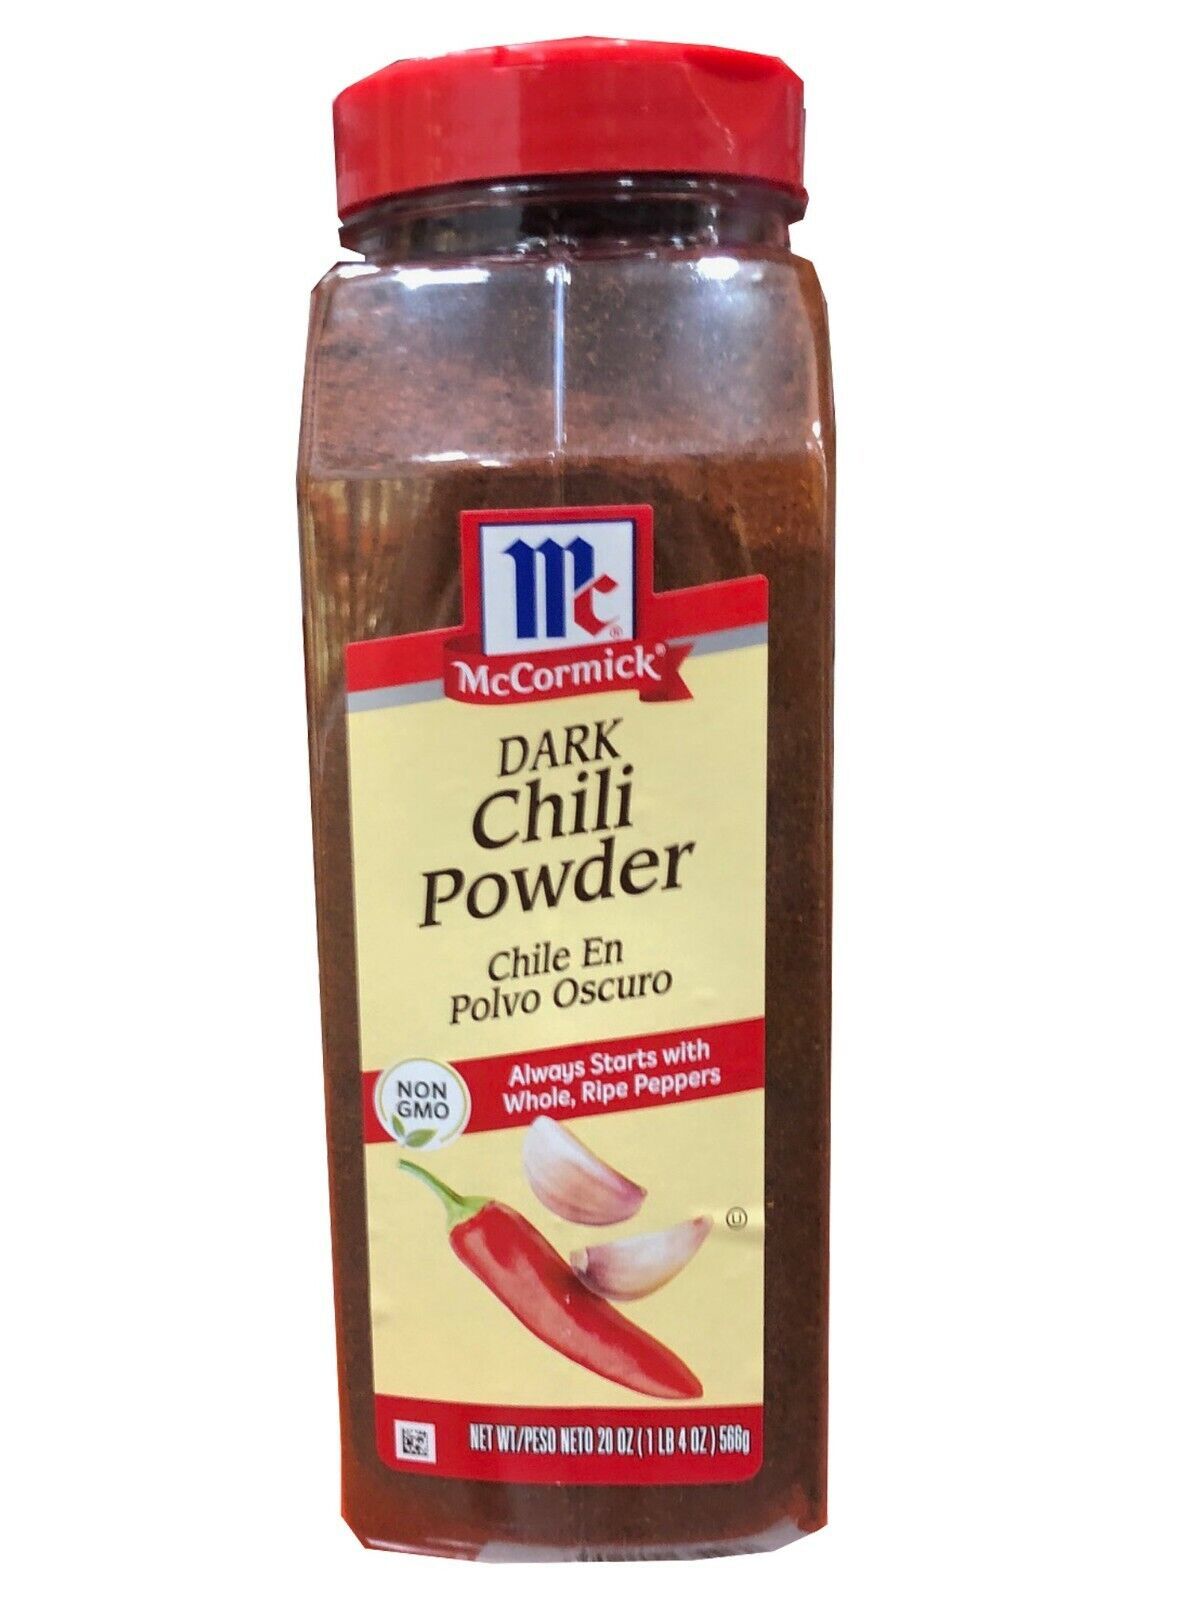  McCormick Dark Chili Powder, 20 oz  - $13.91